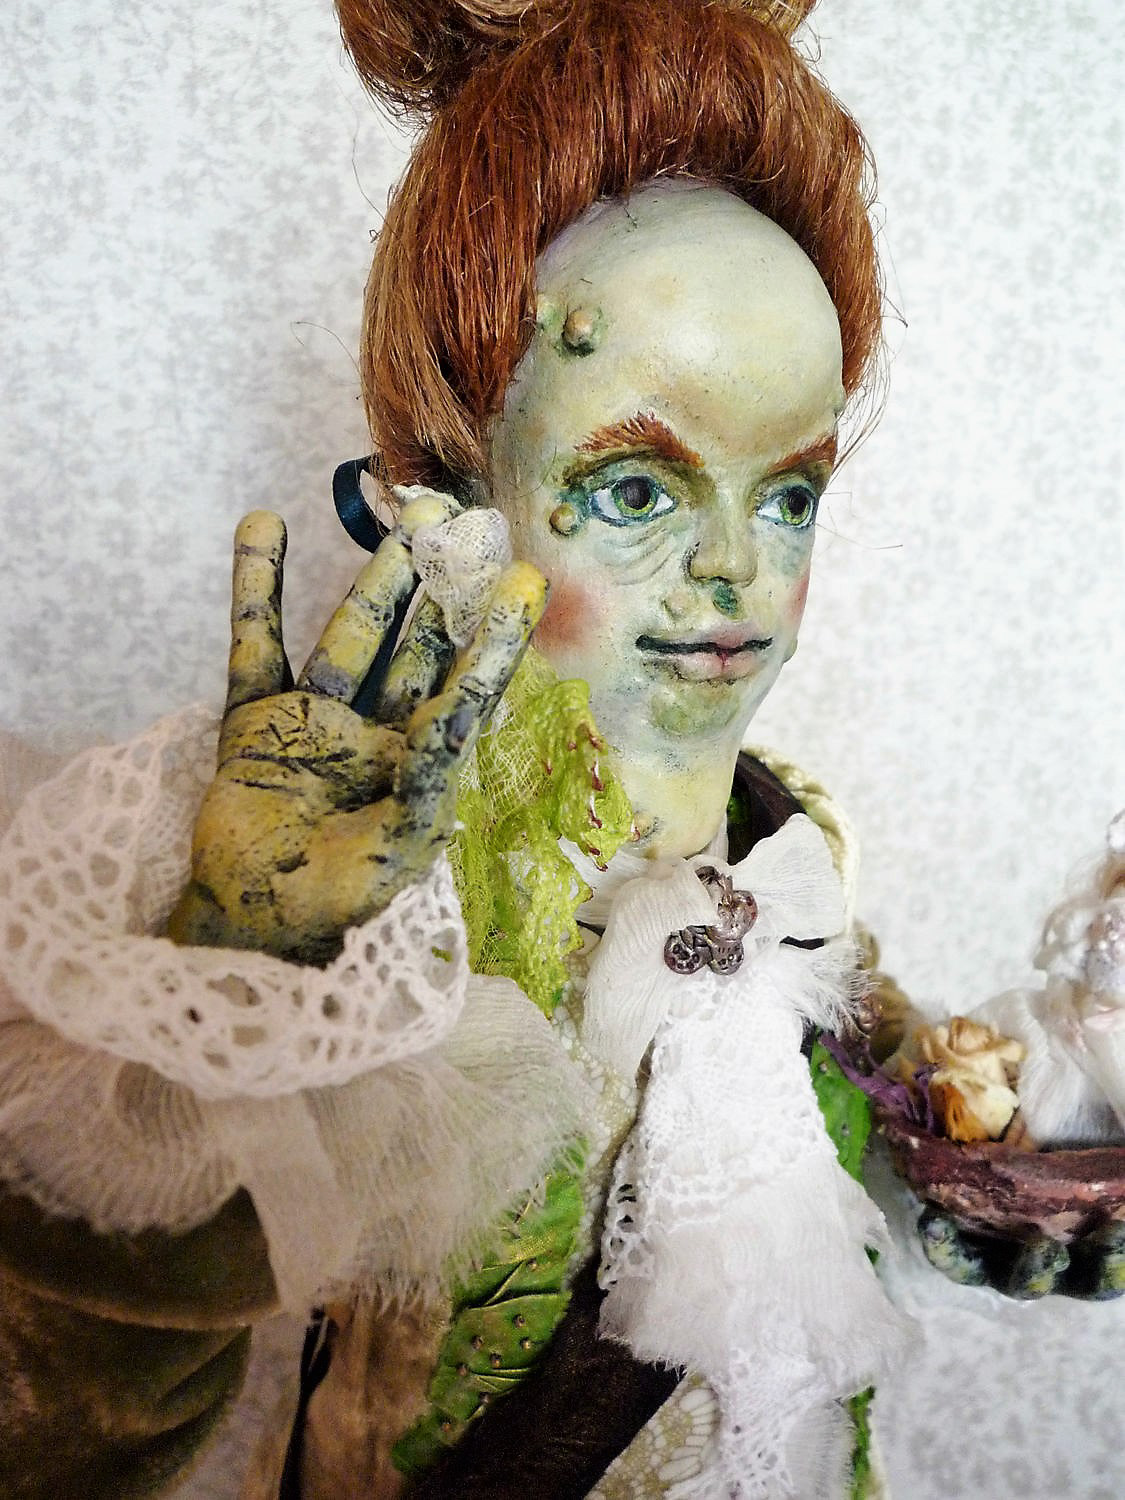 doll author's dolls Culpture artist art gallery handmade handmade doll art doll